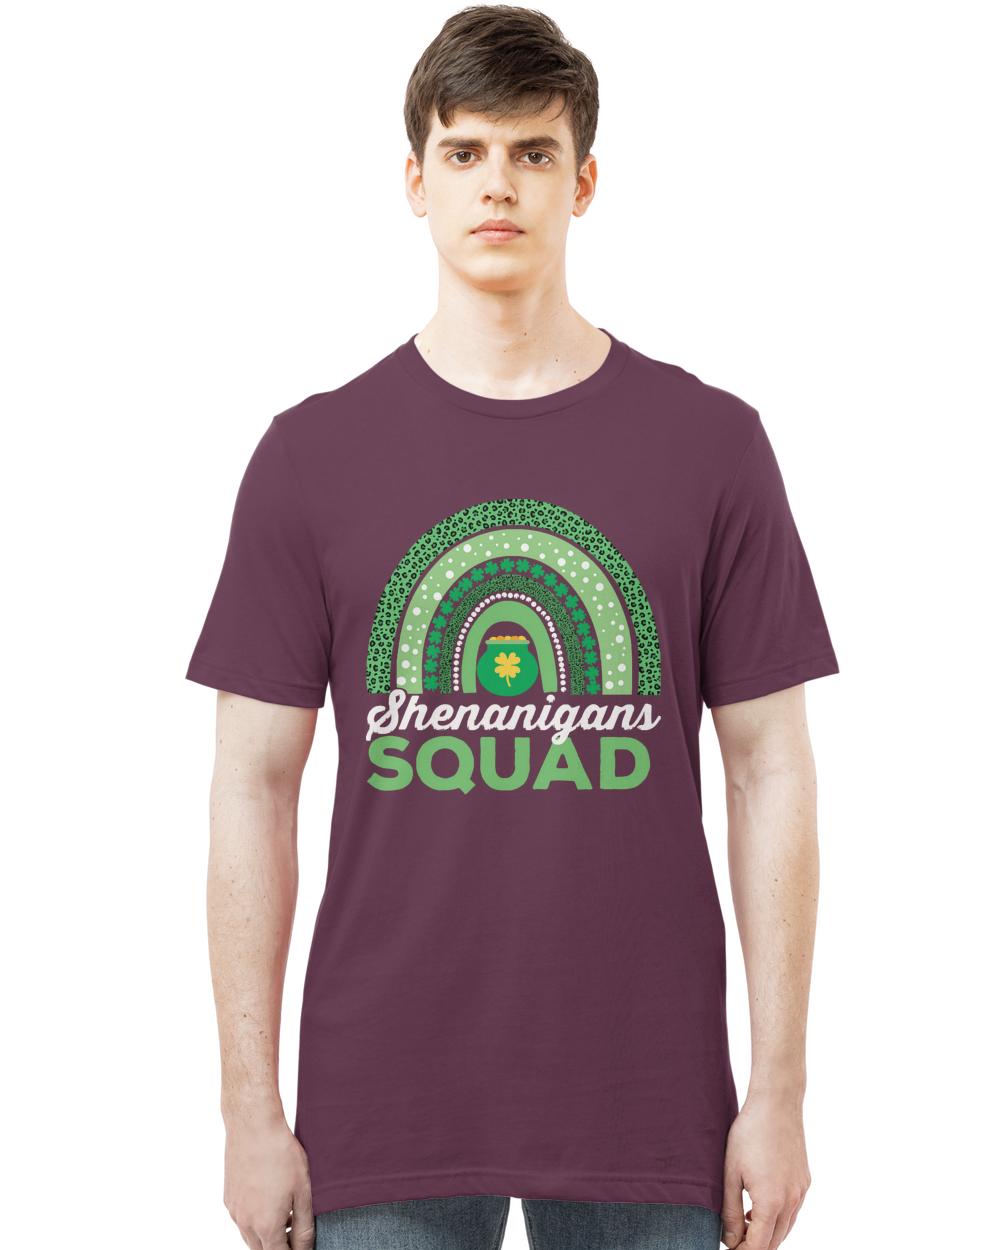 Shenanigans Squad T-ShirtShenanigans Squad St Patrick's Day Rainbow Team T-Shirt_by DetourShirts_